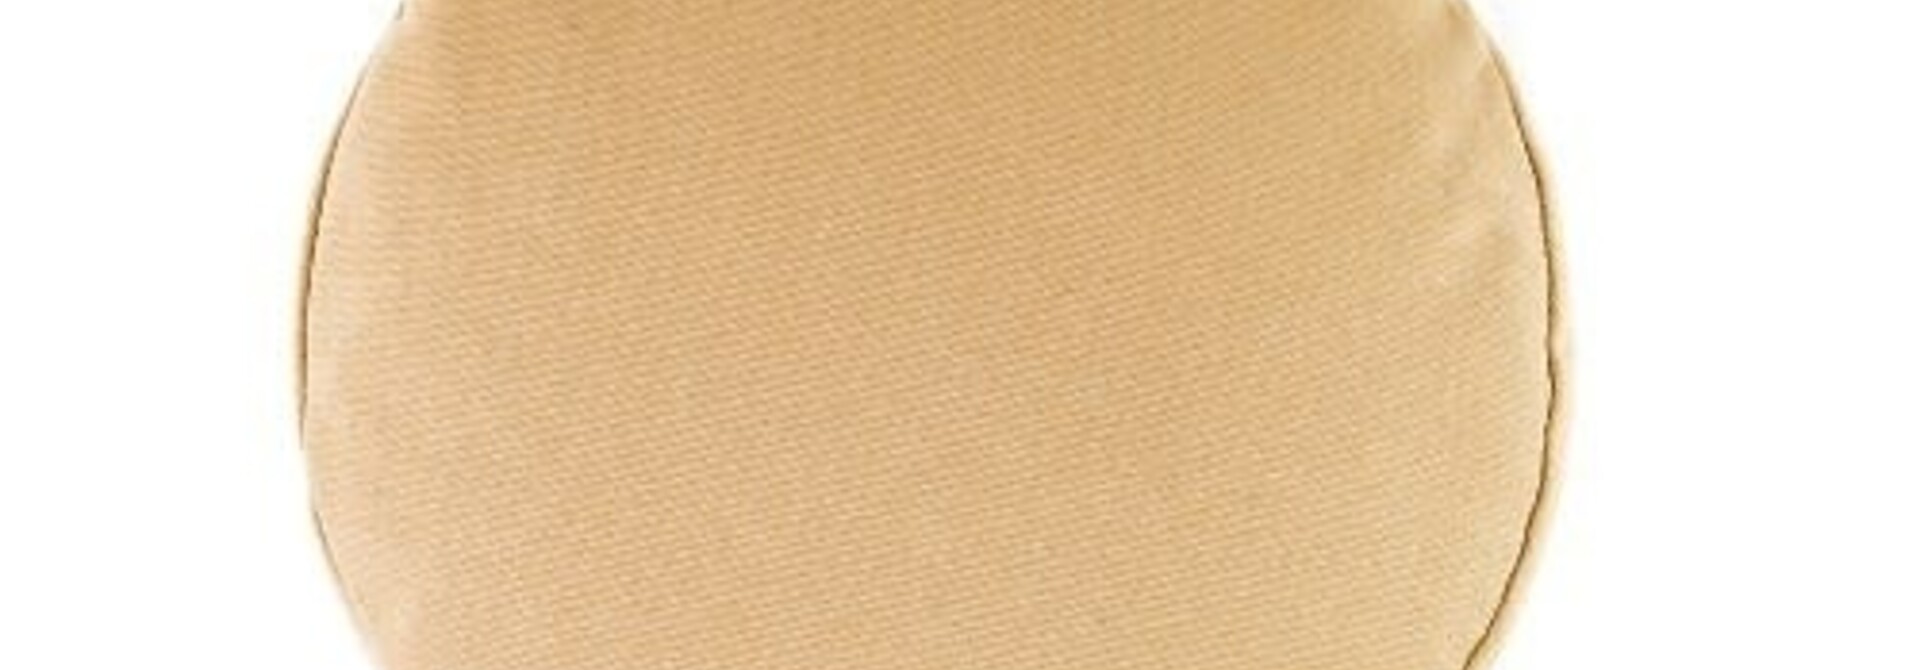 Yogisha Meditationskissen Deluxe 13 cm hoch